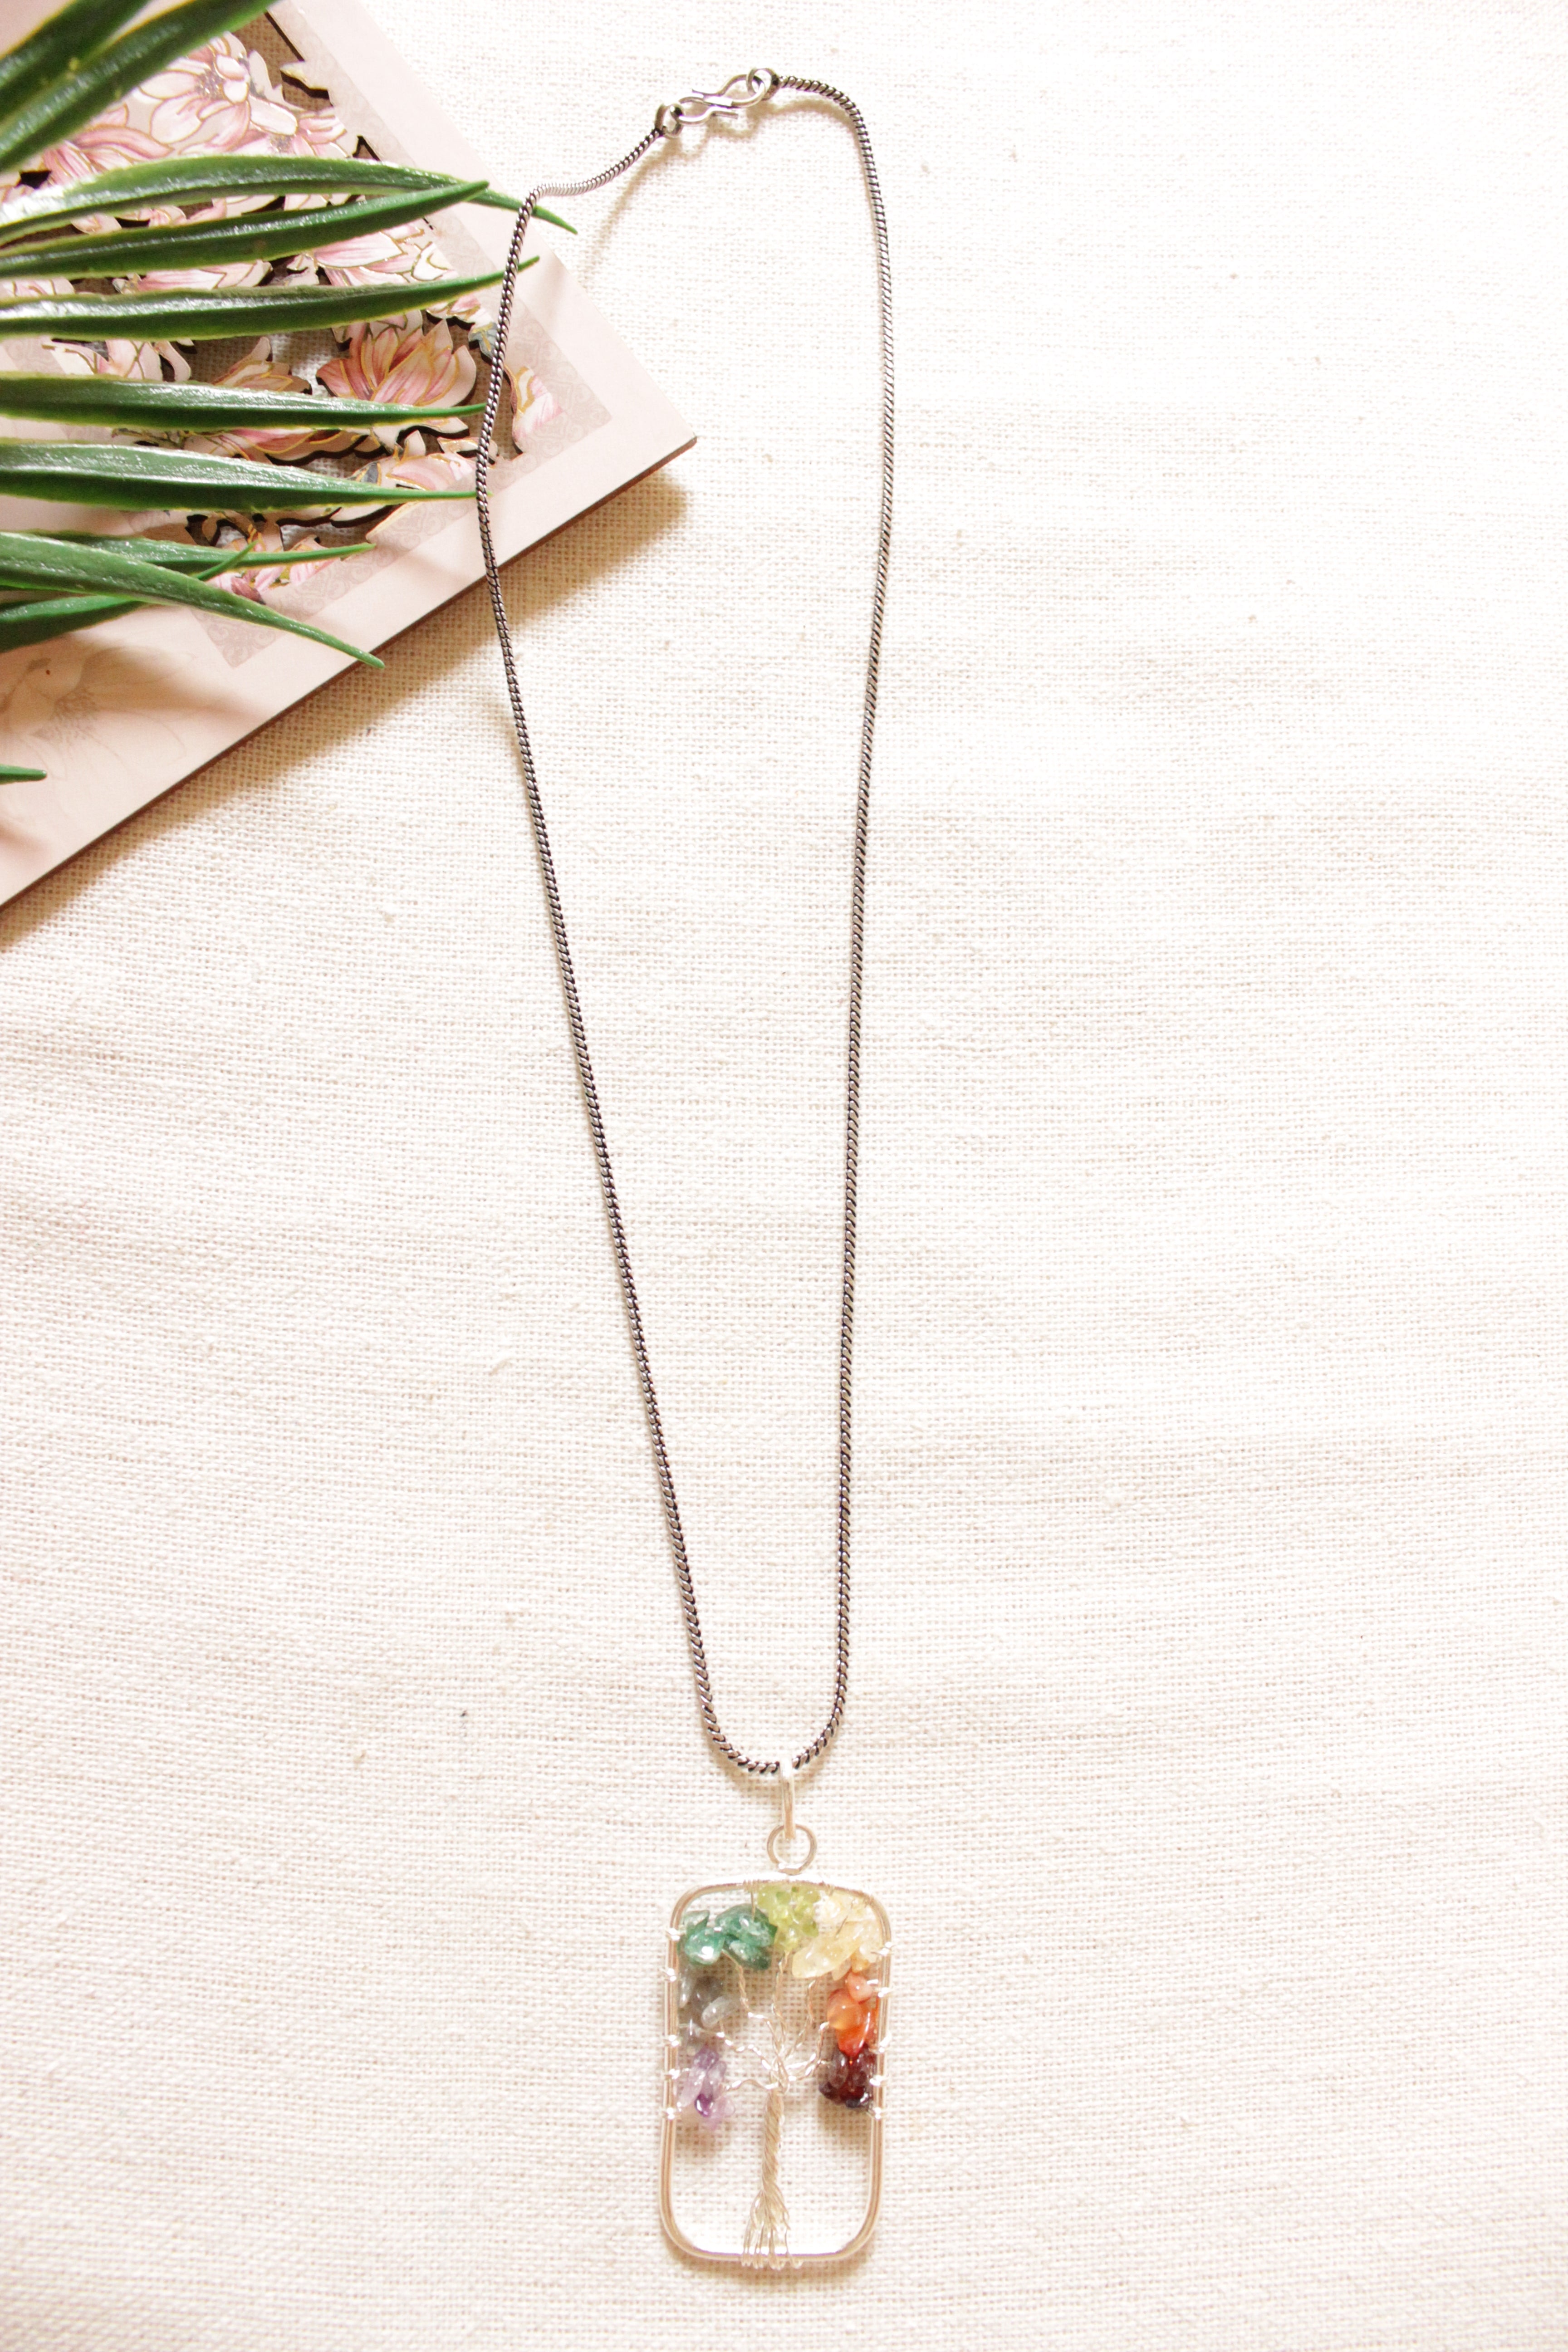 Natural Gemstones Embedded Tree Shaped Pendant Silver Finish Handmade Necklace